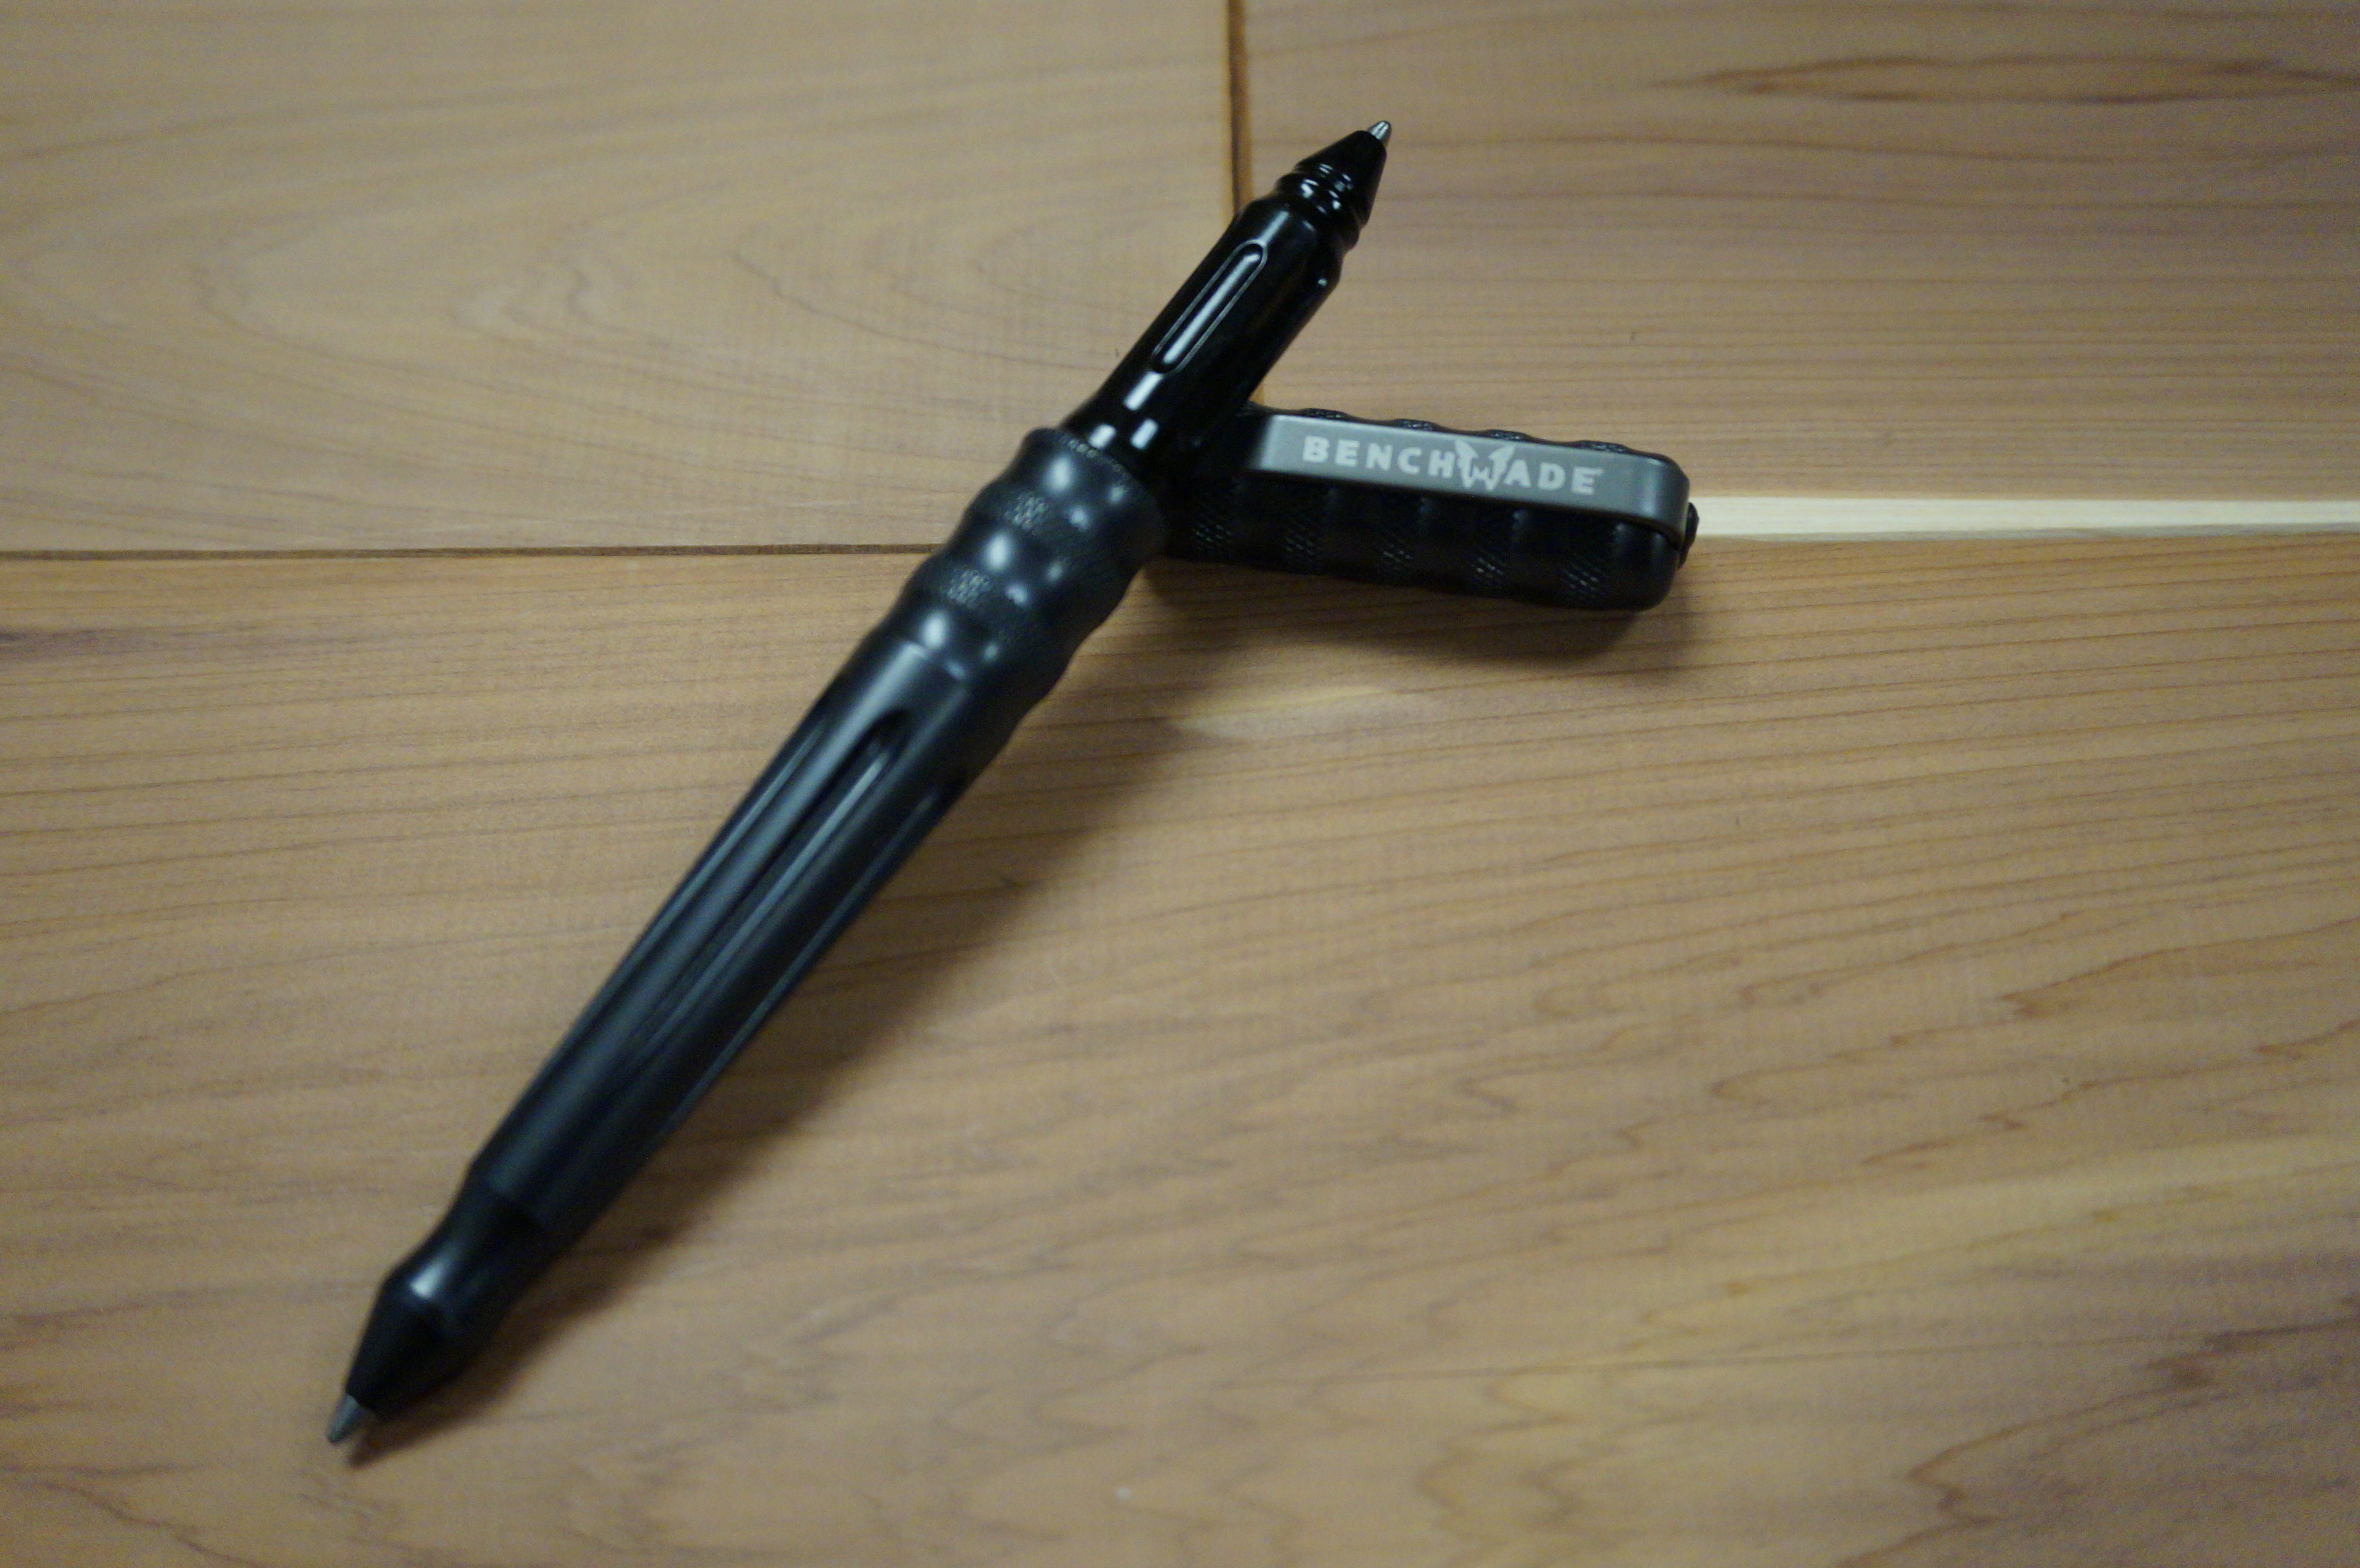 Benchmade 1100 Series Tactical Pen 